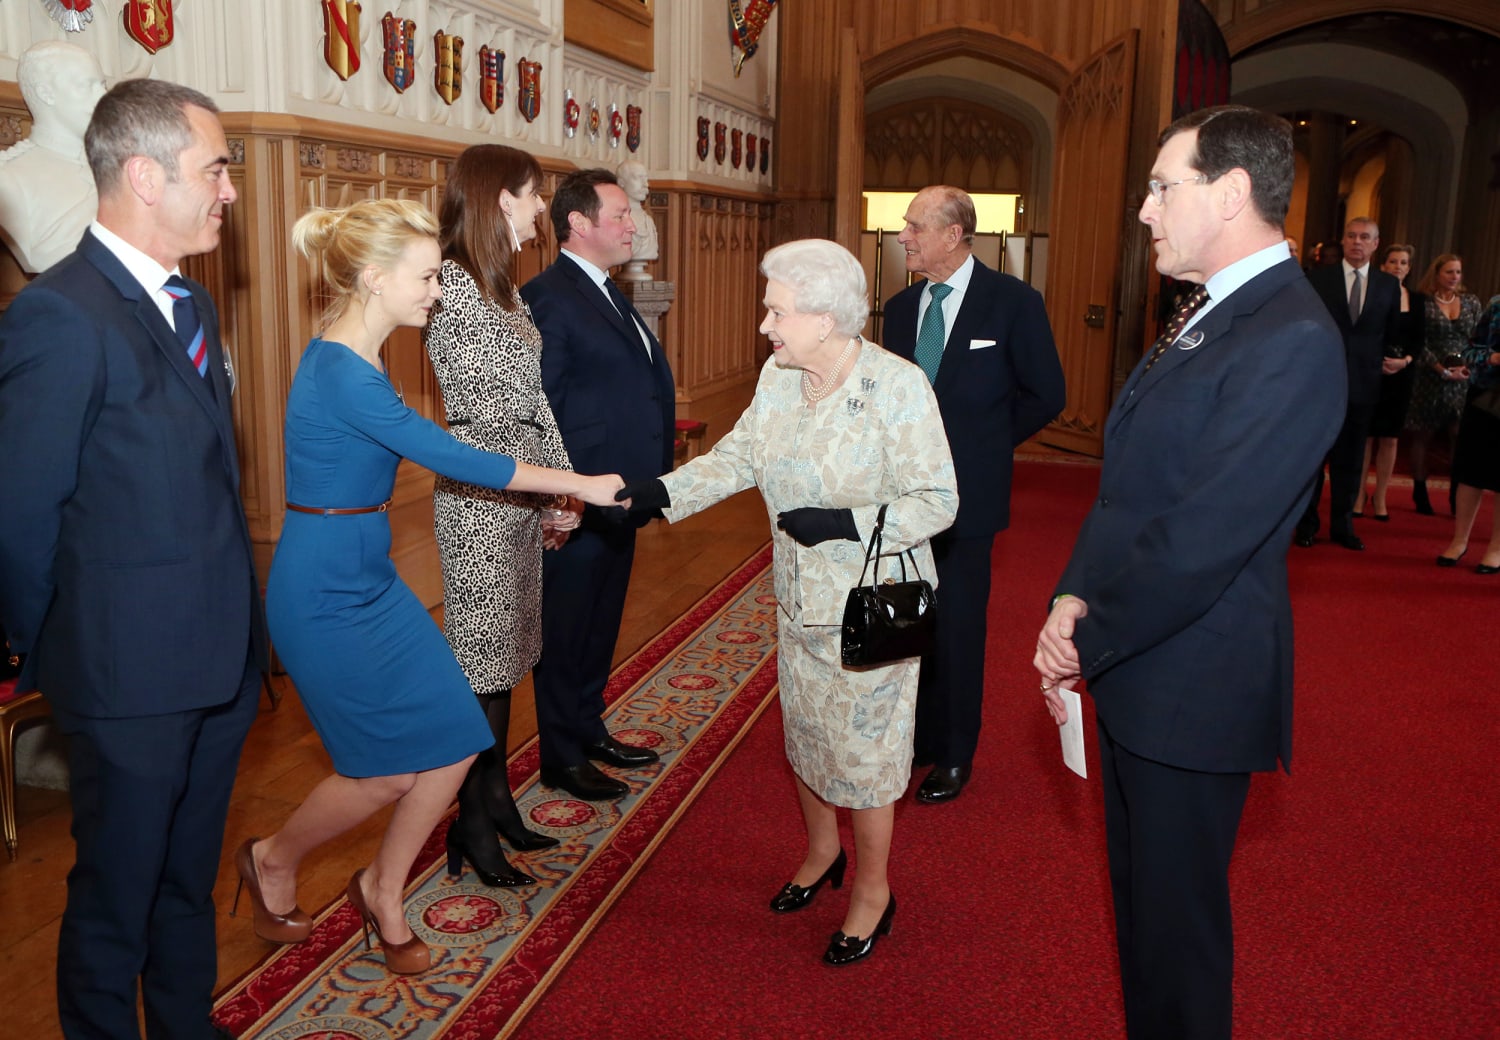 Queen's handbag was her secret weapon - hidden messages to staff and  mystery contents - Mirror Online